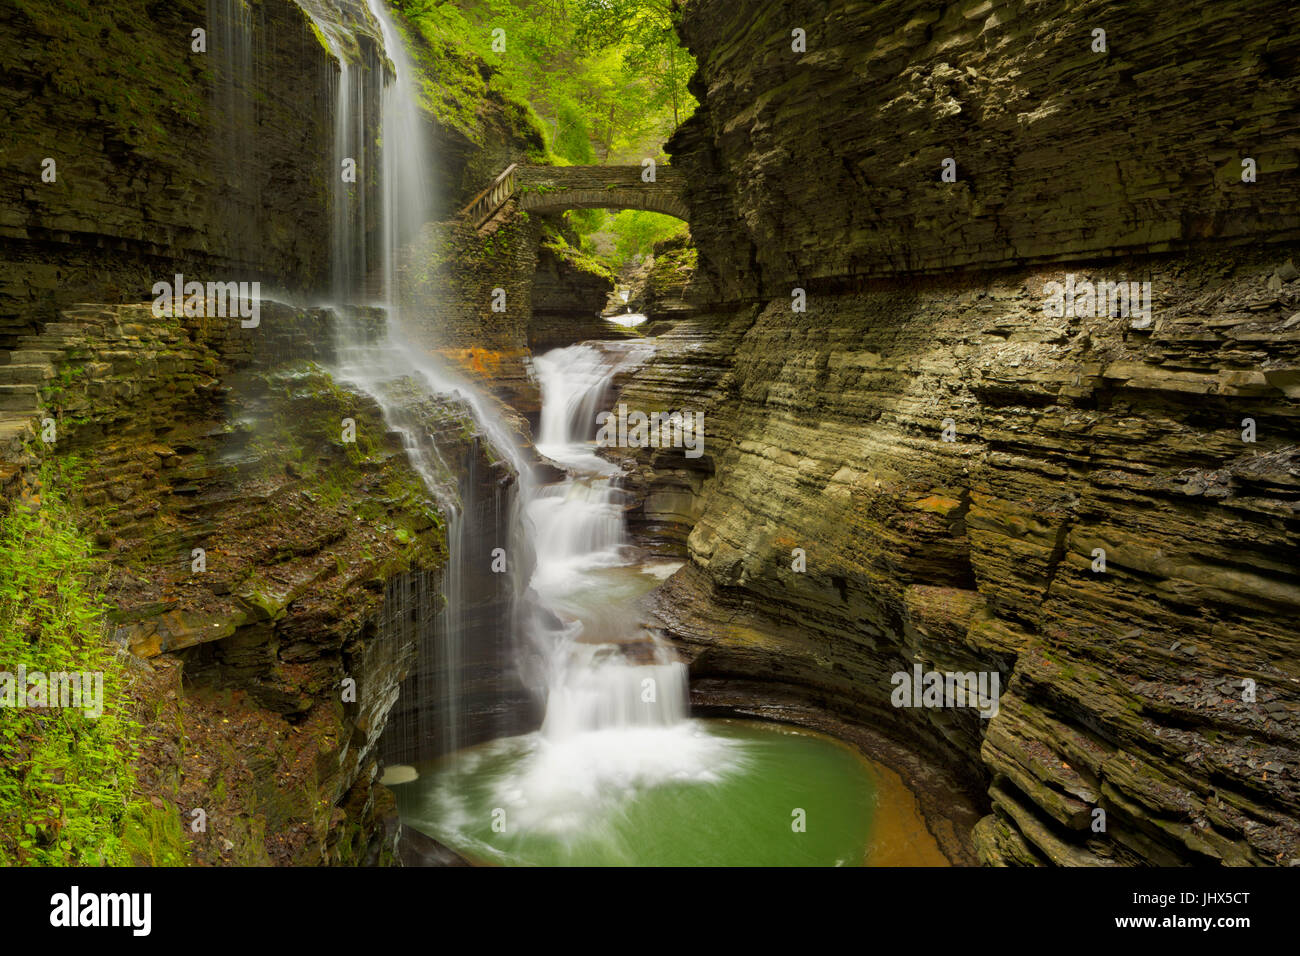 The Rainbow Falls waterfall in Watkins Glen Gorge in New York state, USA. Stock Photo